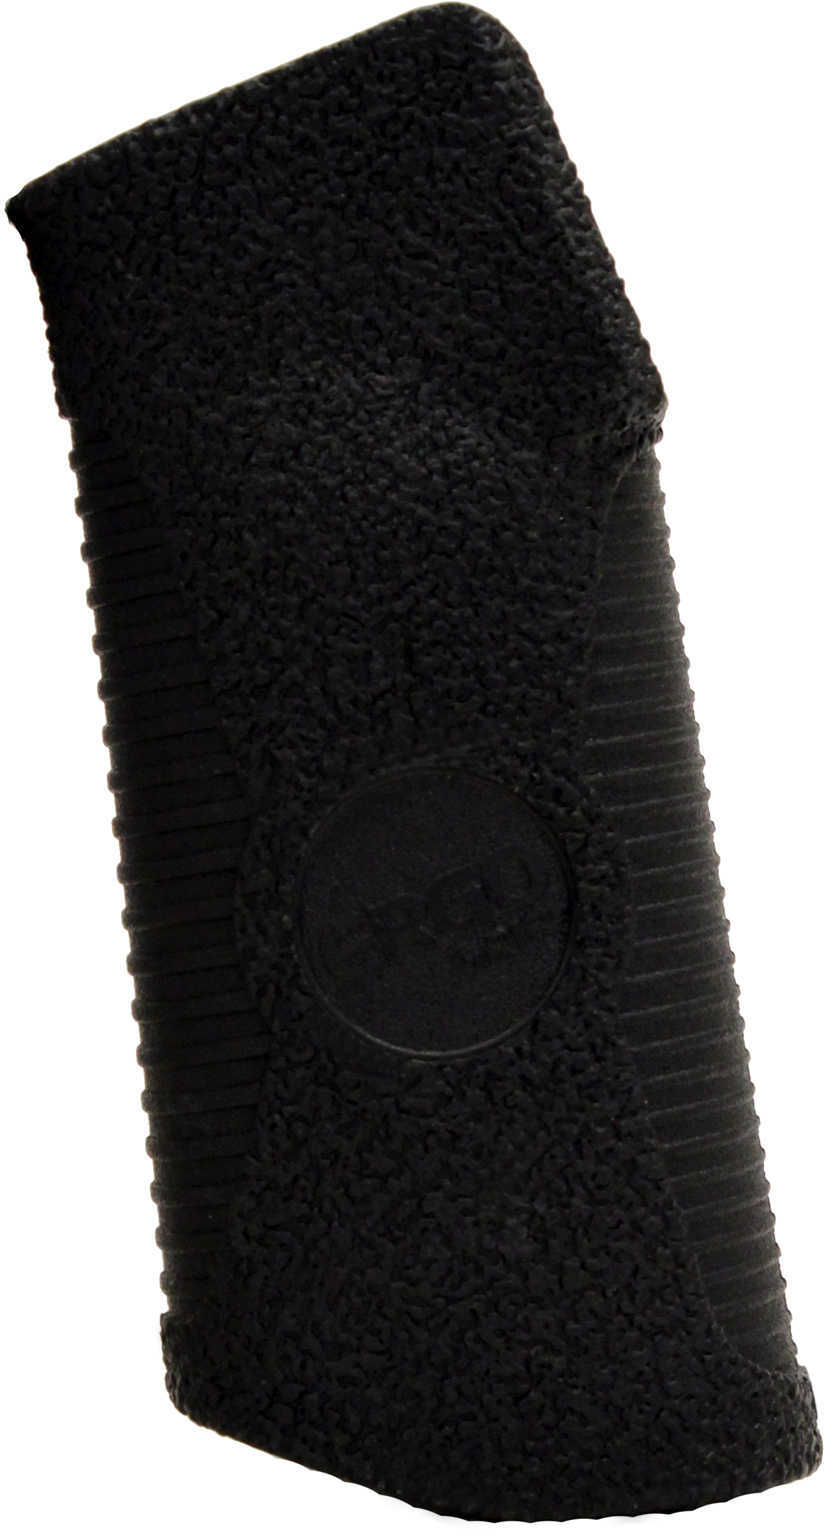 Ergo Grip Swift Fits Compact Black 4093-BK